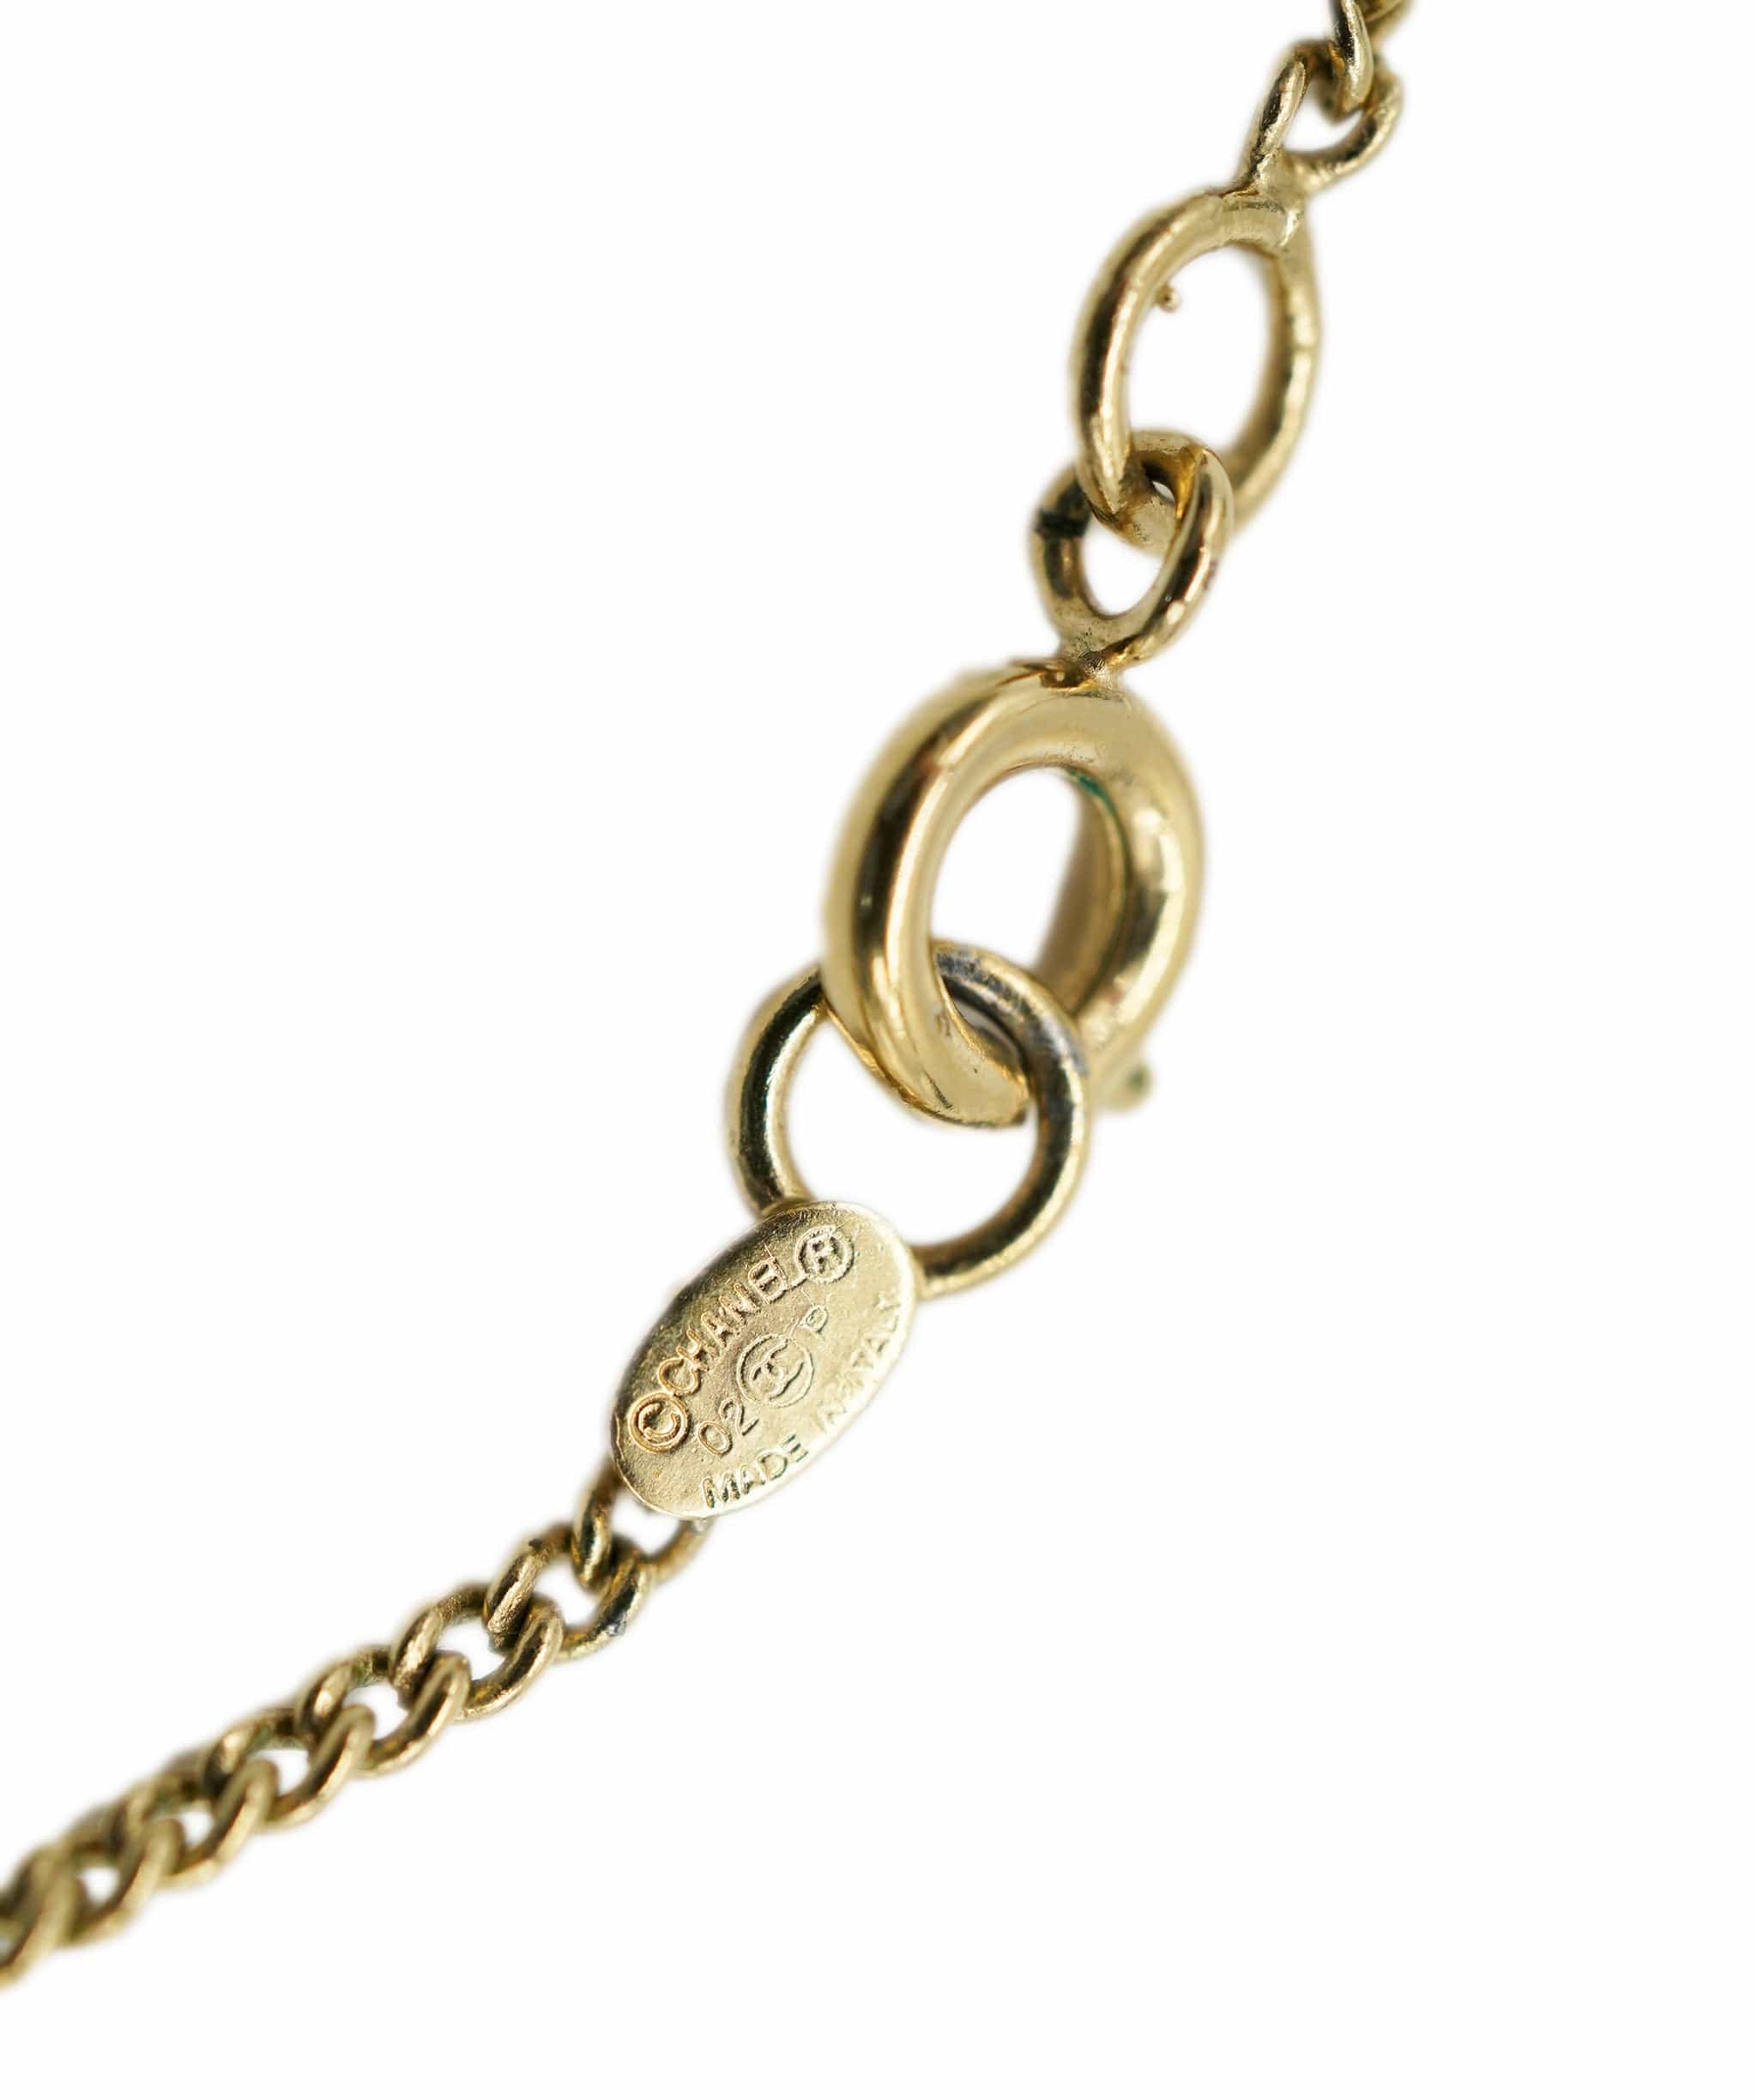 Chanel Chanel cream camellia flower pendant necklace - AJL0184